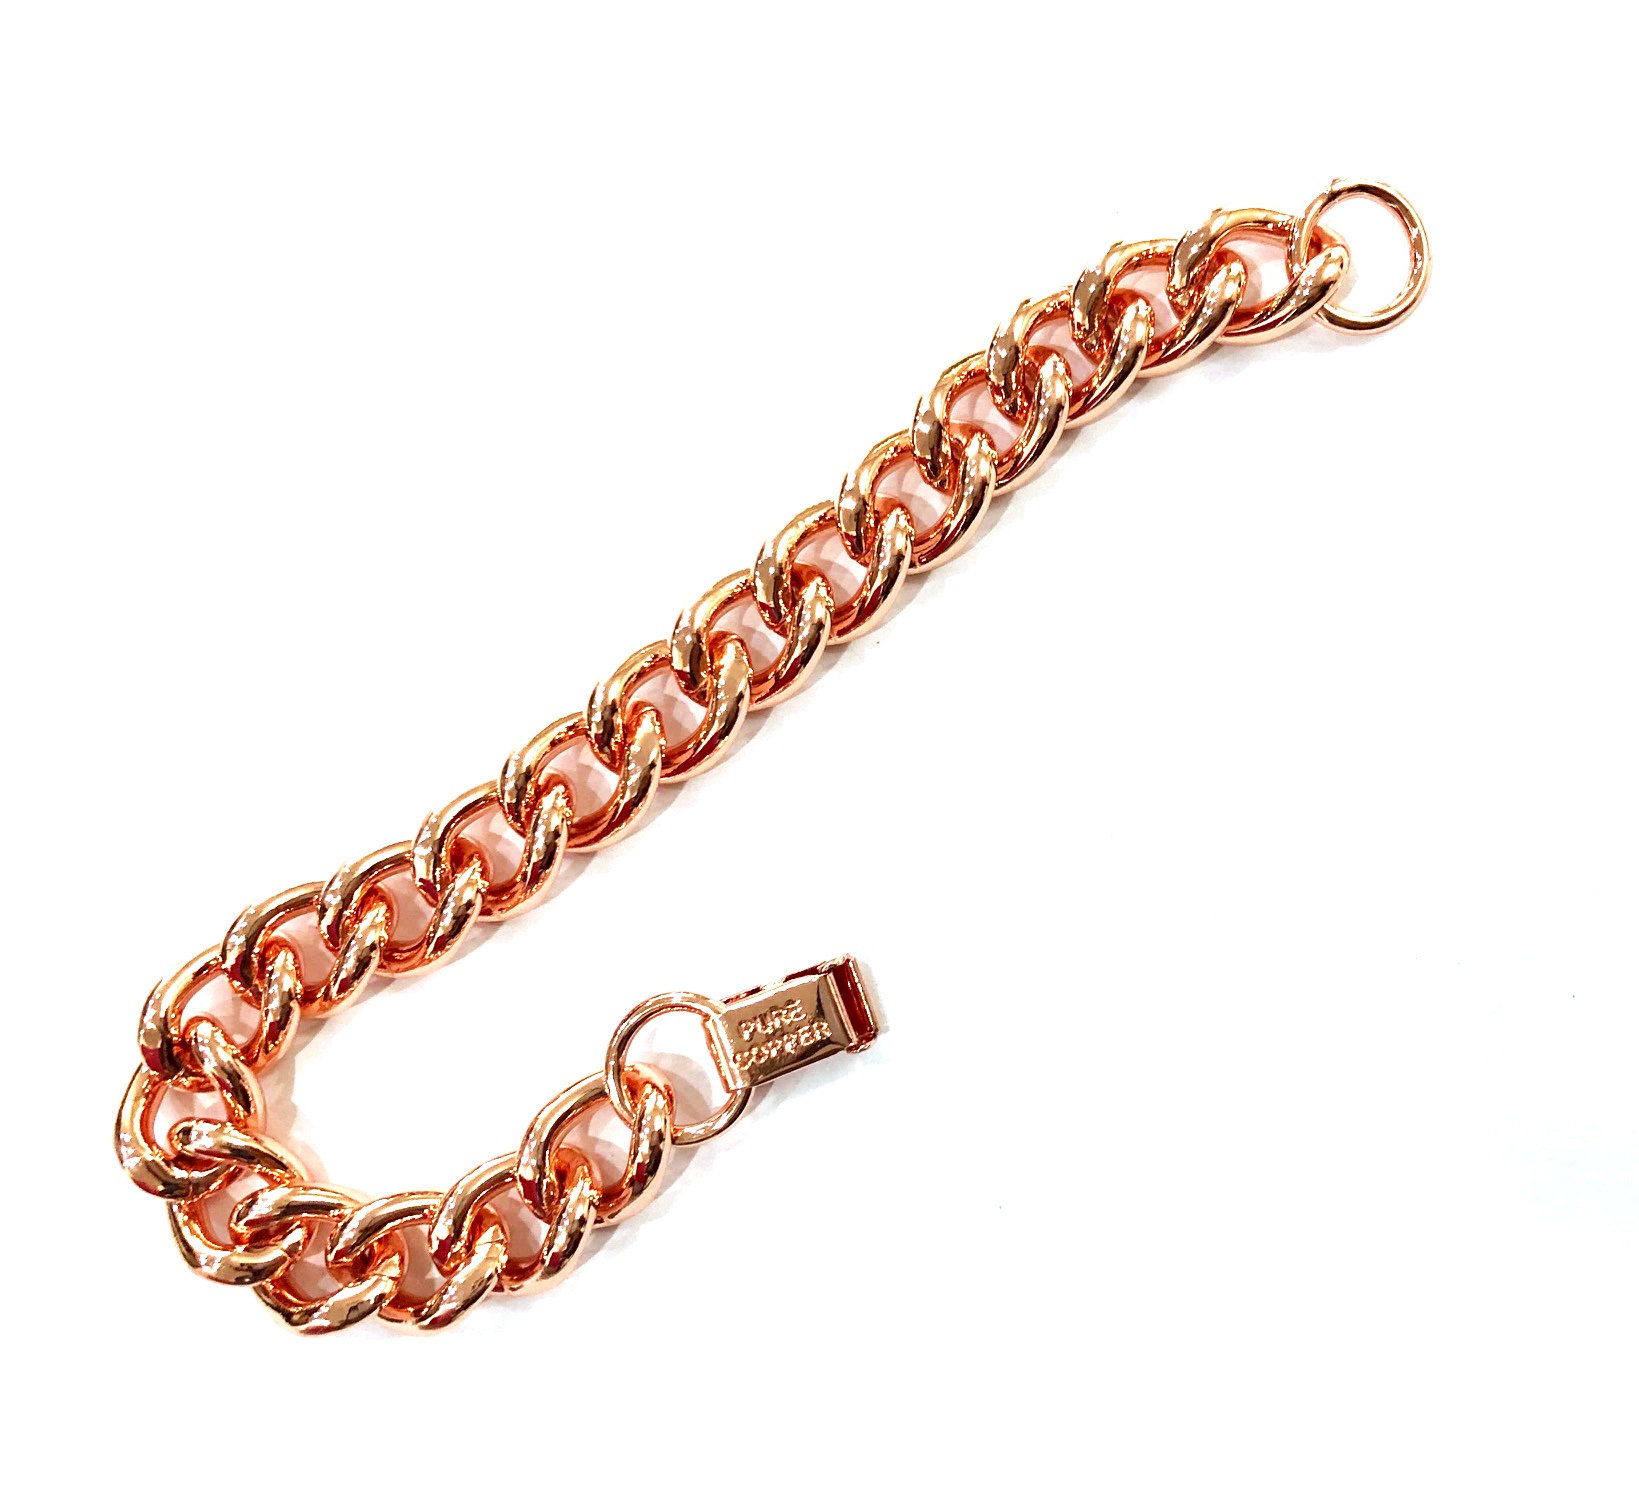 1 PC. 99.95% Pure Heavy Link Copper Bracelet For Men And Women #CLB-100